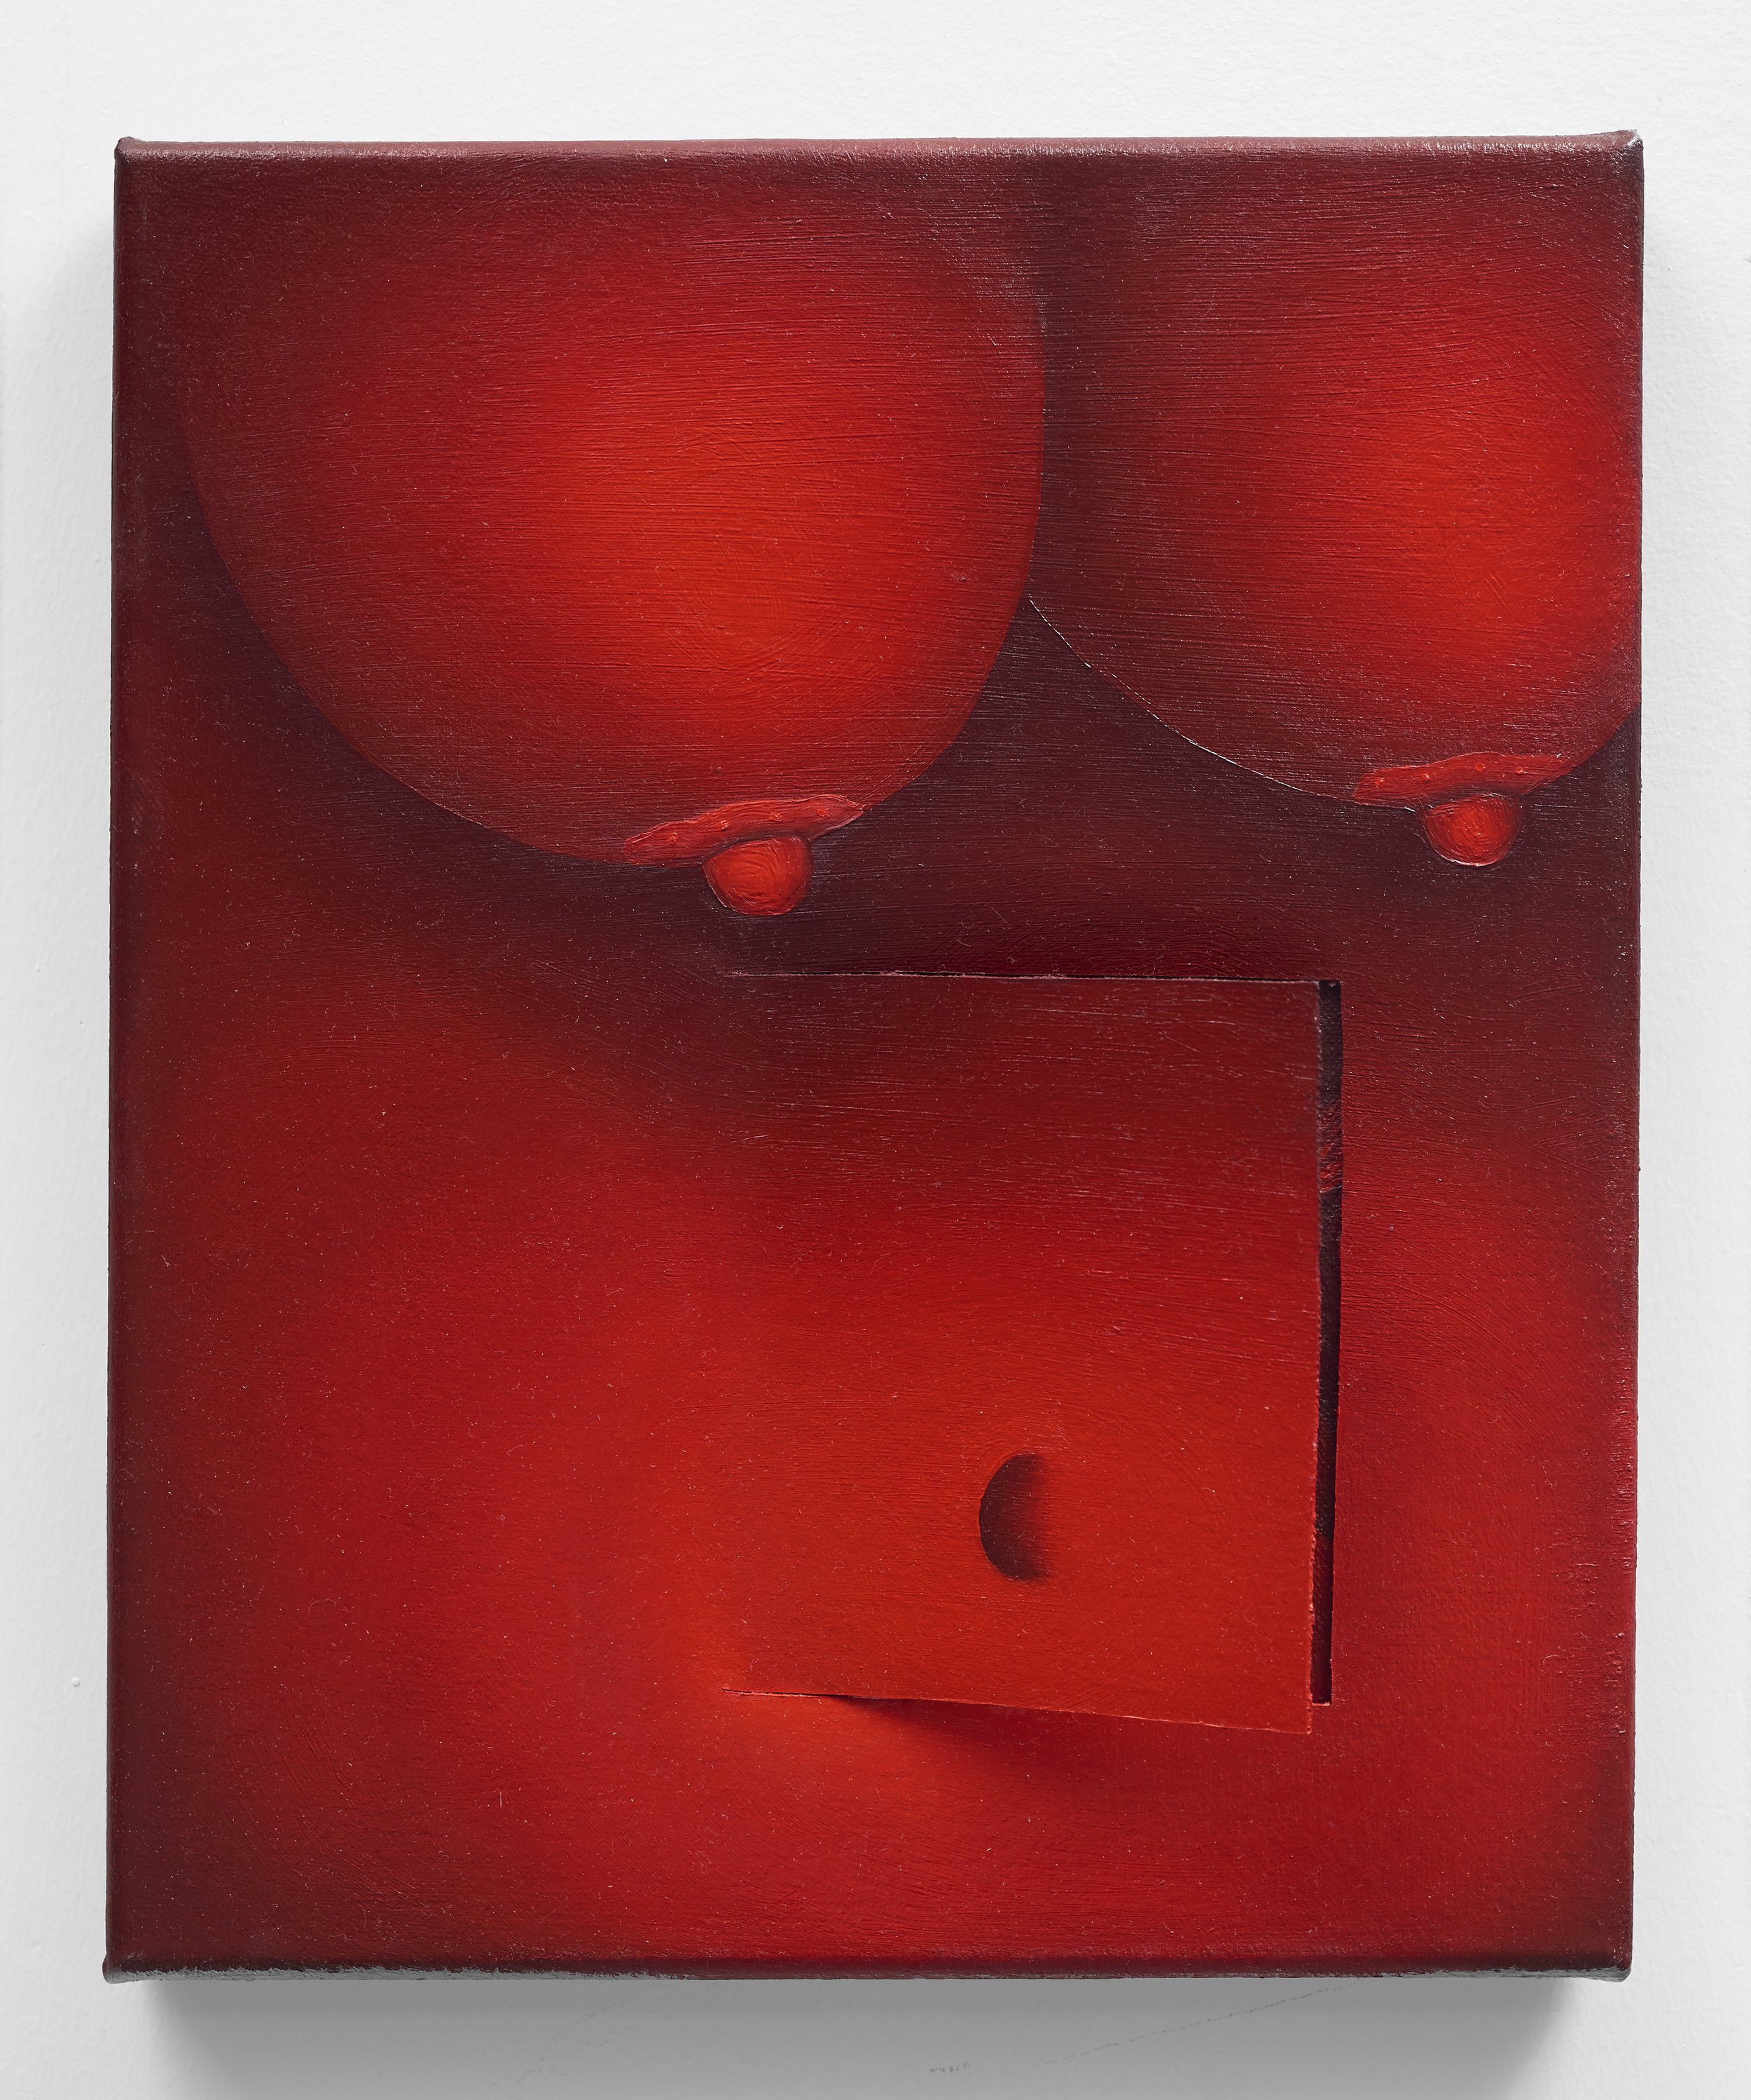   Punto ciego , 12” x 10”, oil on canvas, 2020     